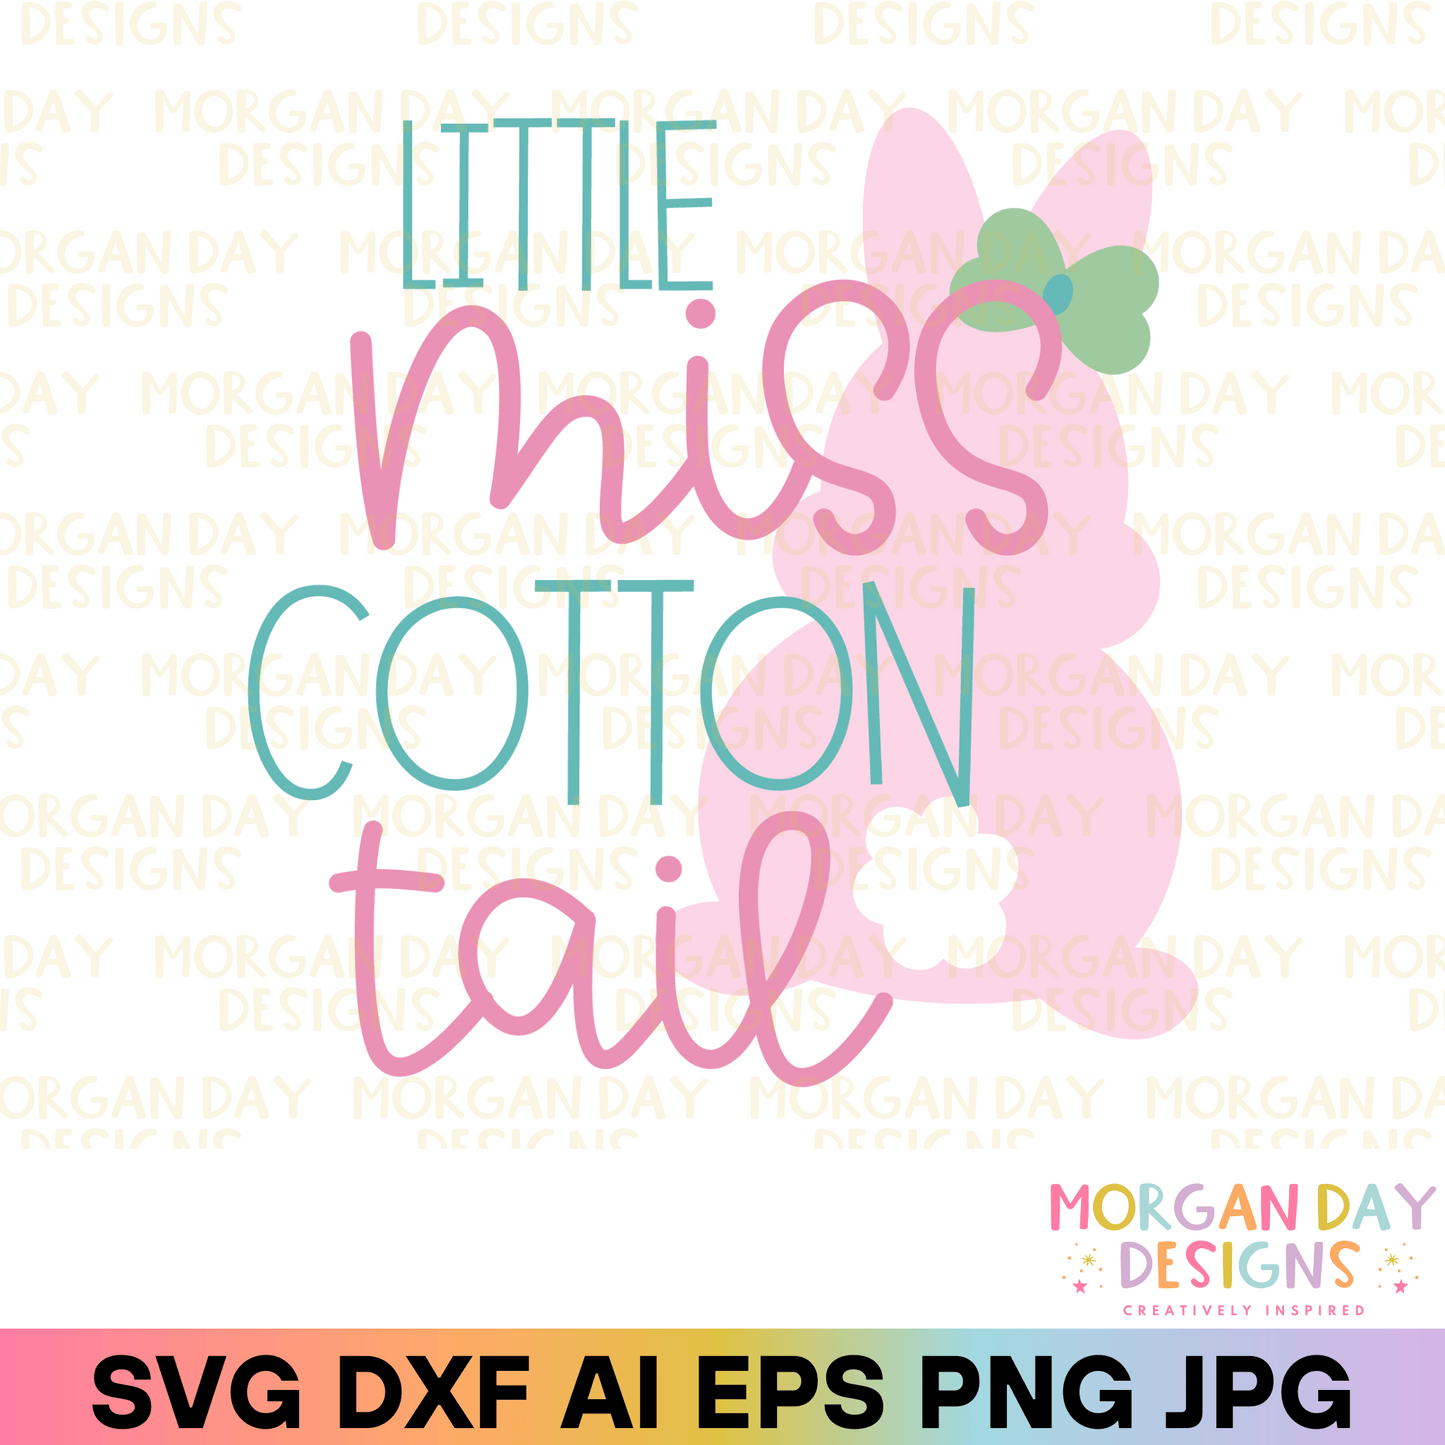 Little Miss Cotton Tail SVG